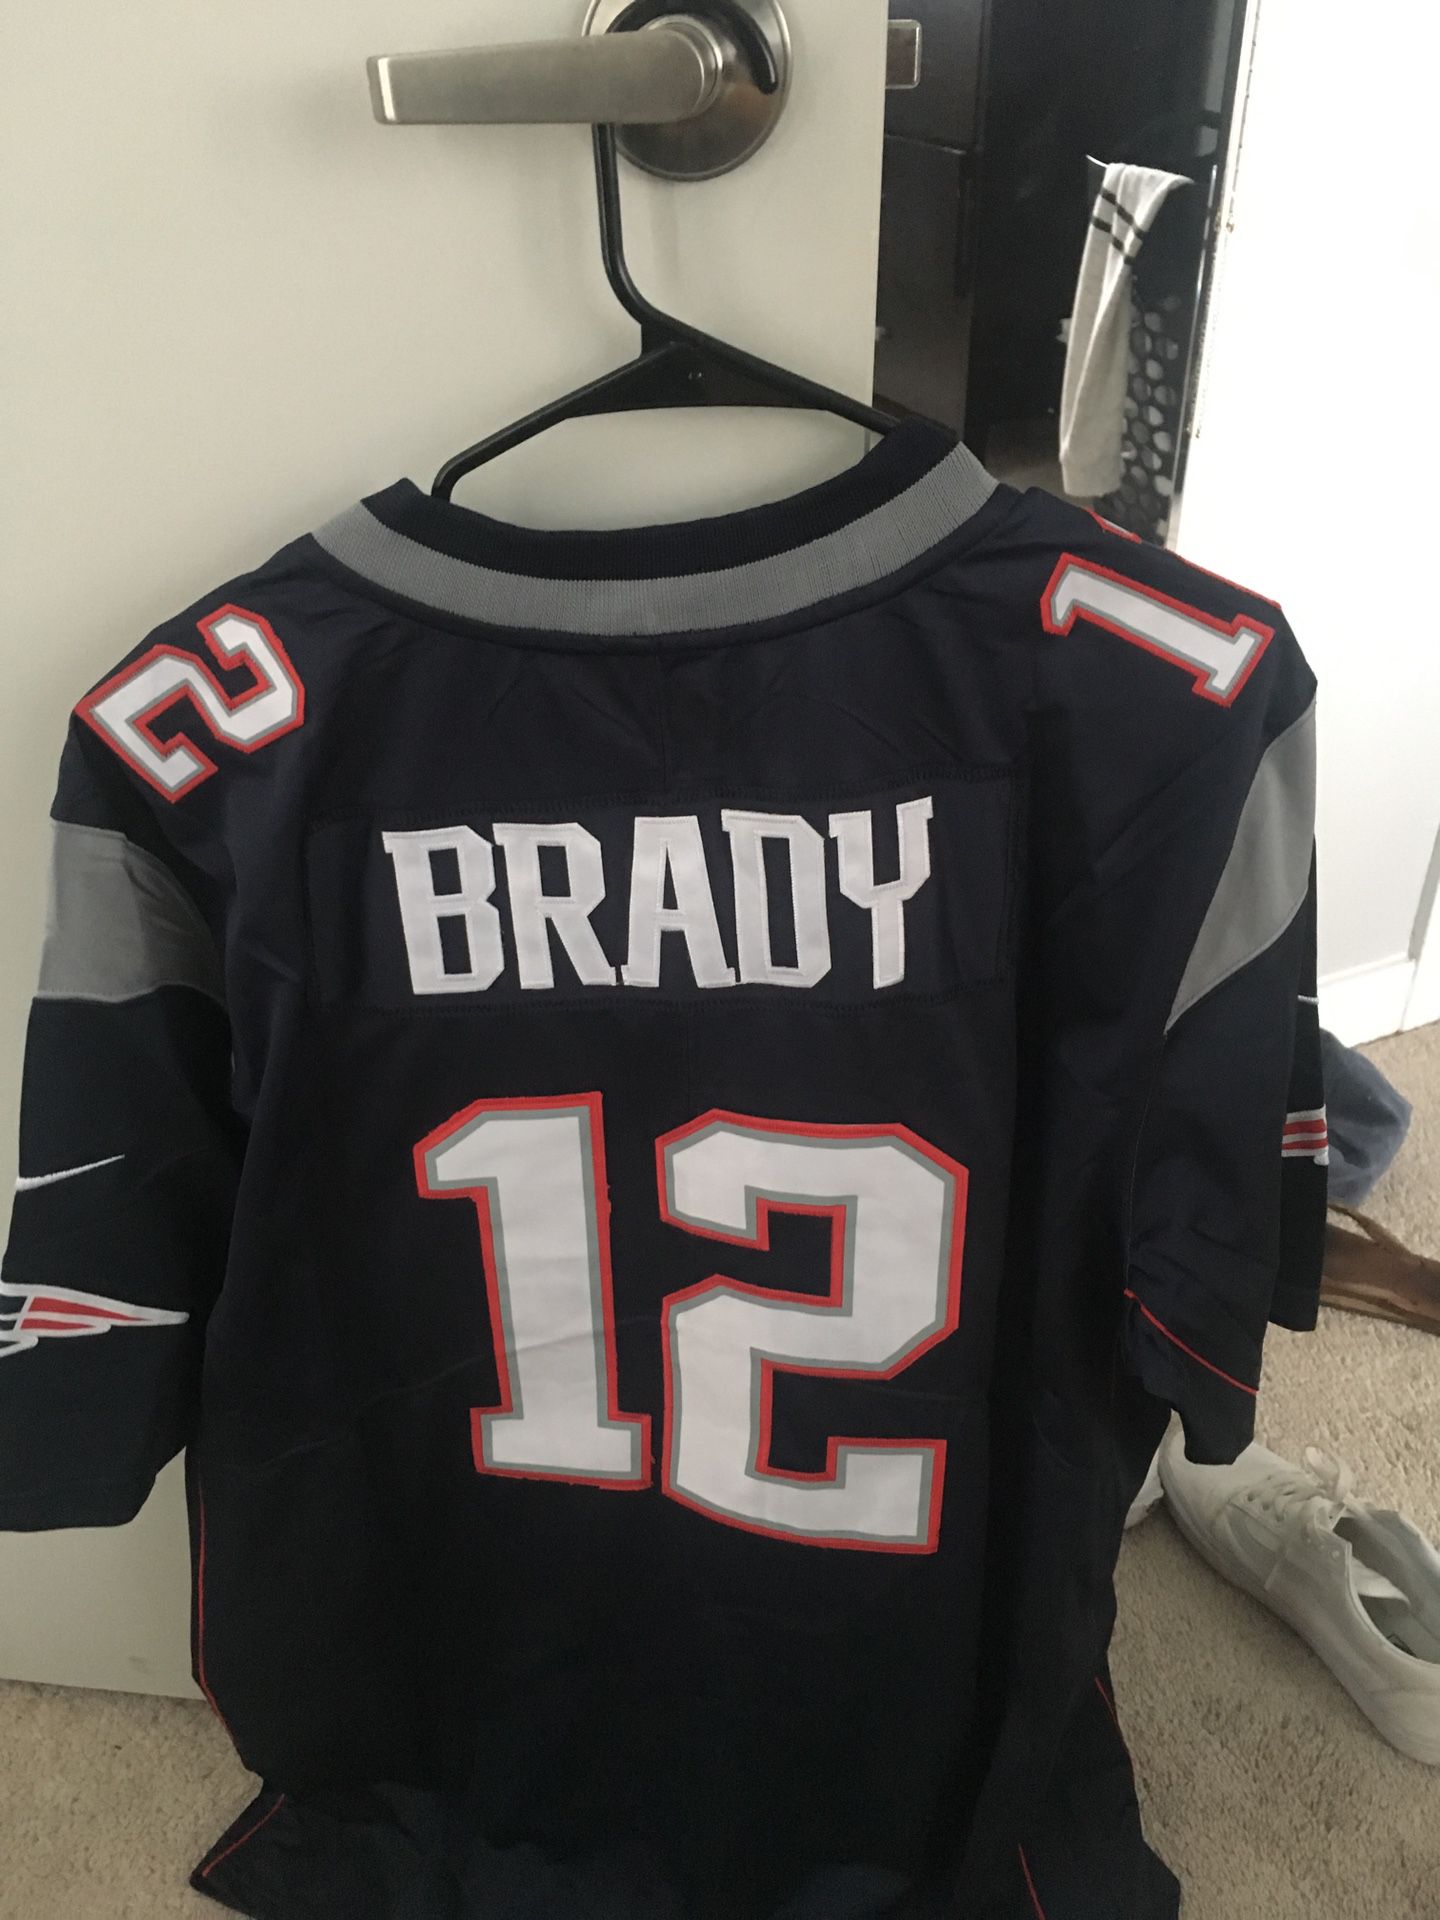 Brady patriots jersey